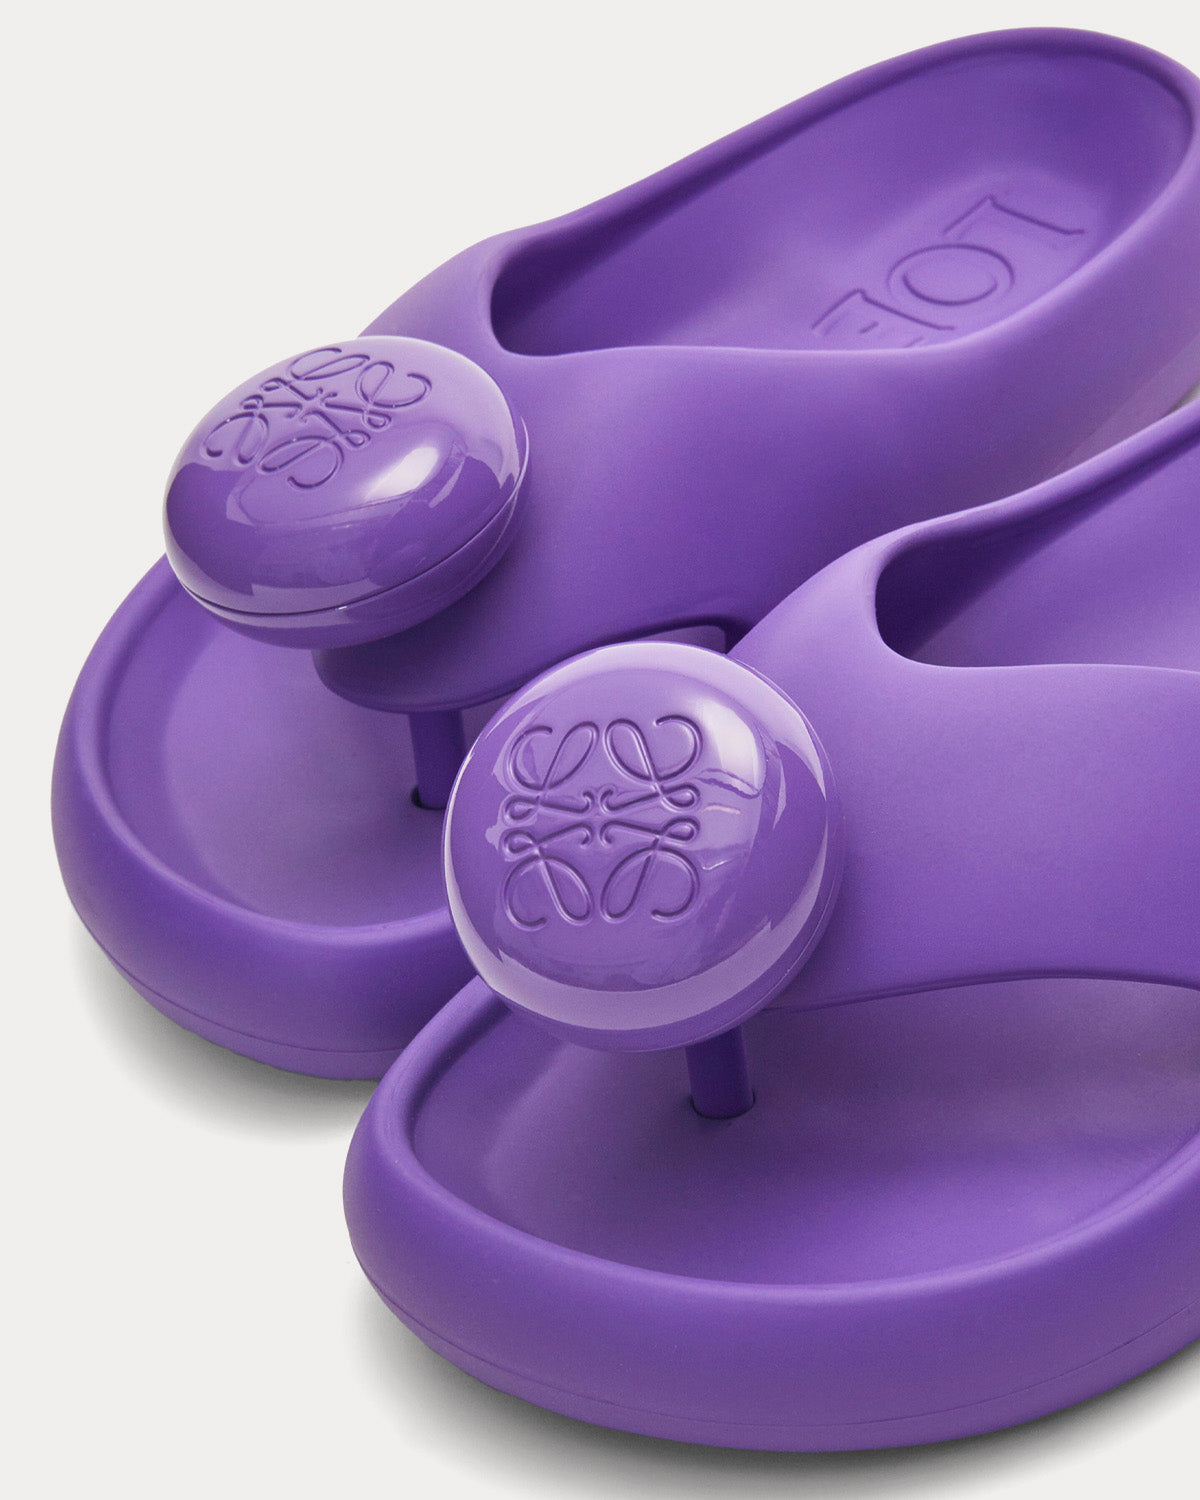 Loewe x Paula's Ibiza - Bubble Thong Slide Light Foam Rubber Purple Slip Ons